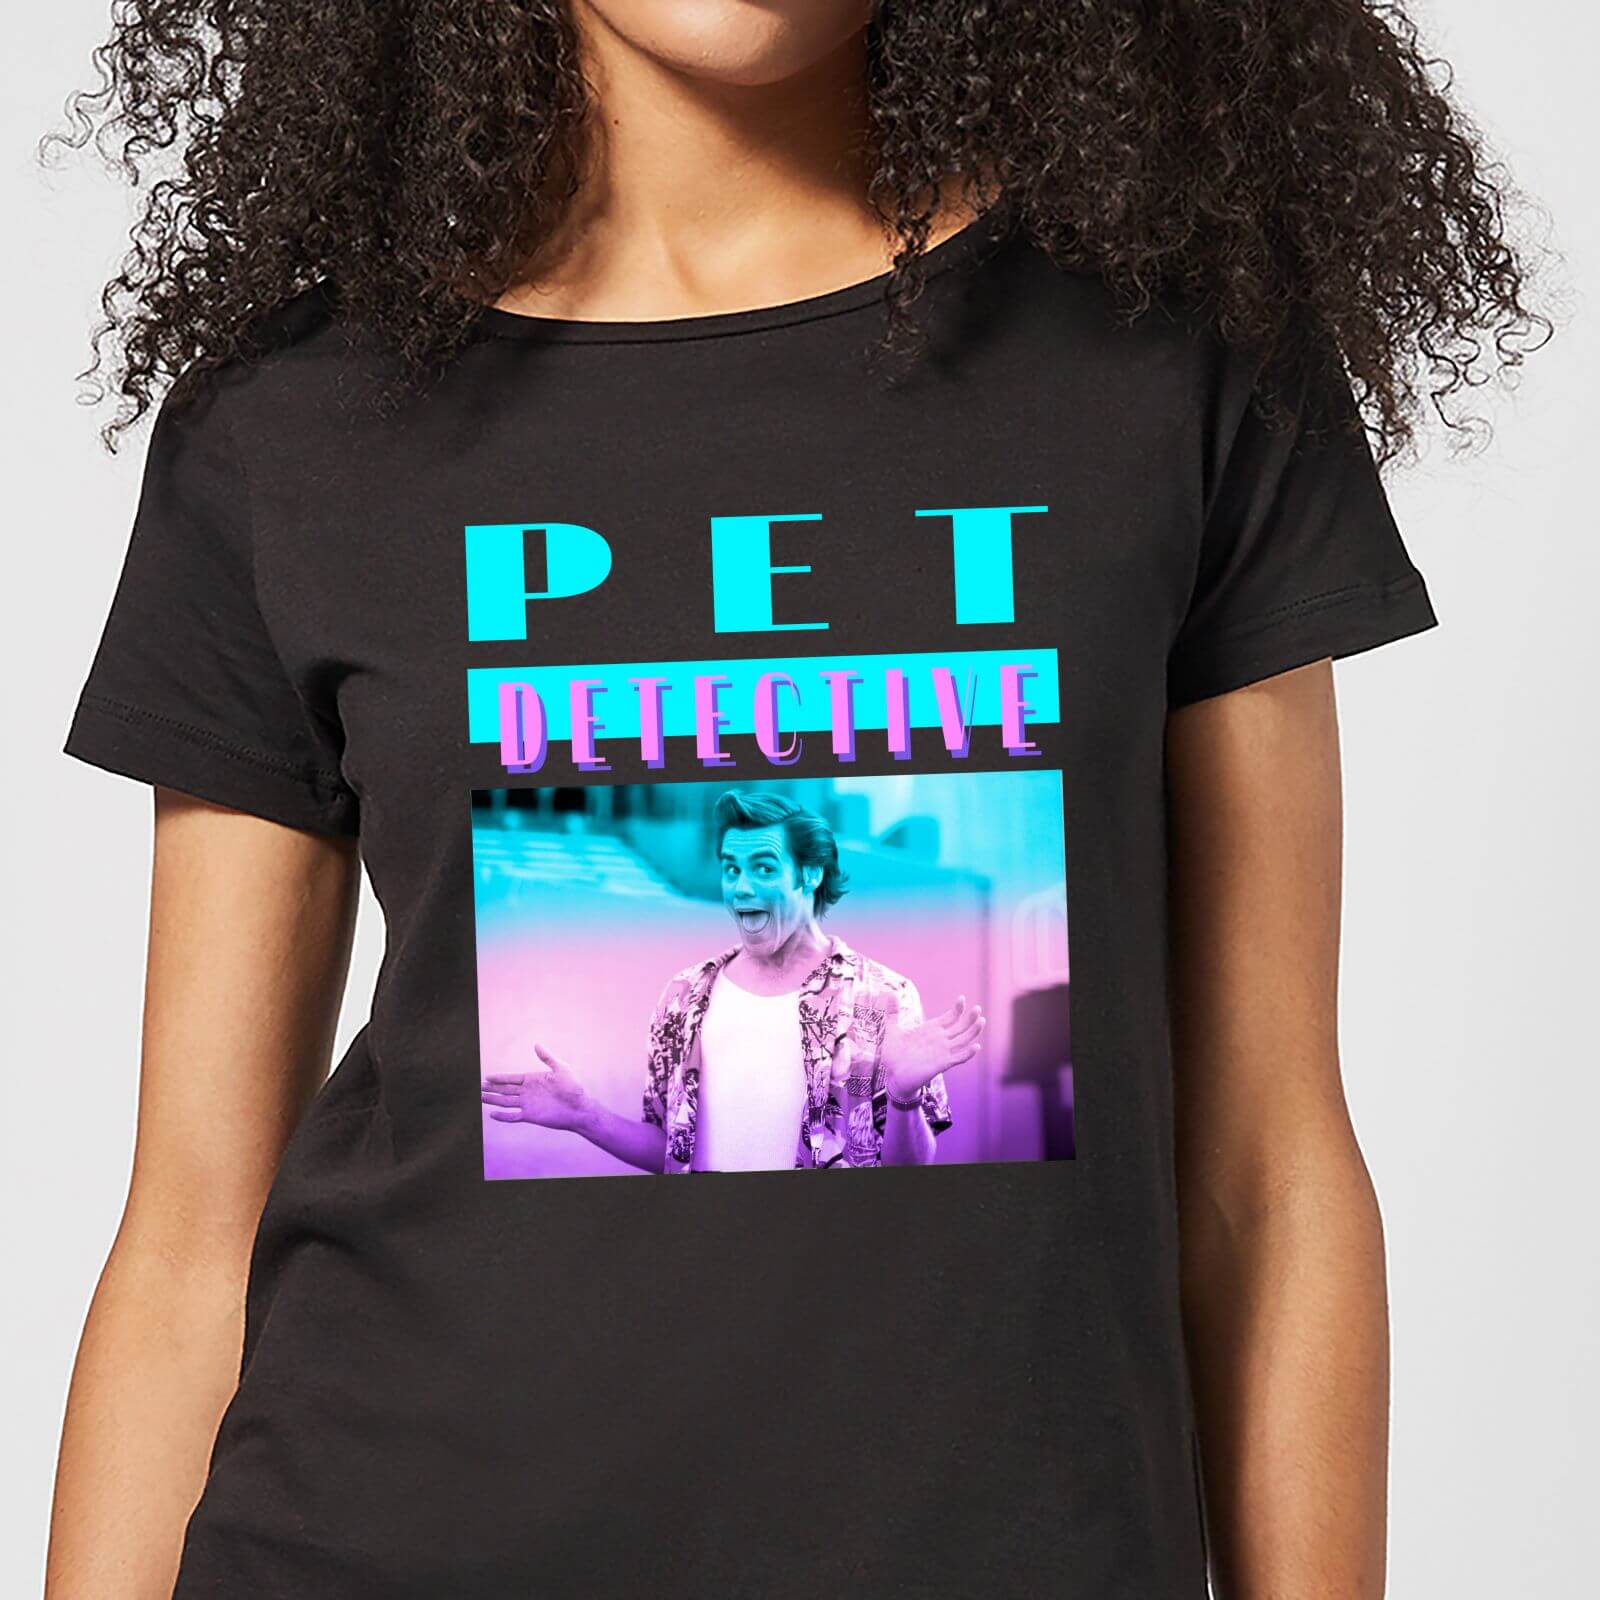 Ace Ventura Neon Women's T-Shirt - Black - 3XL